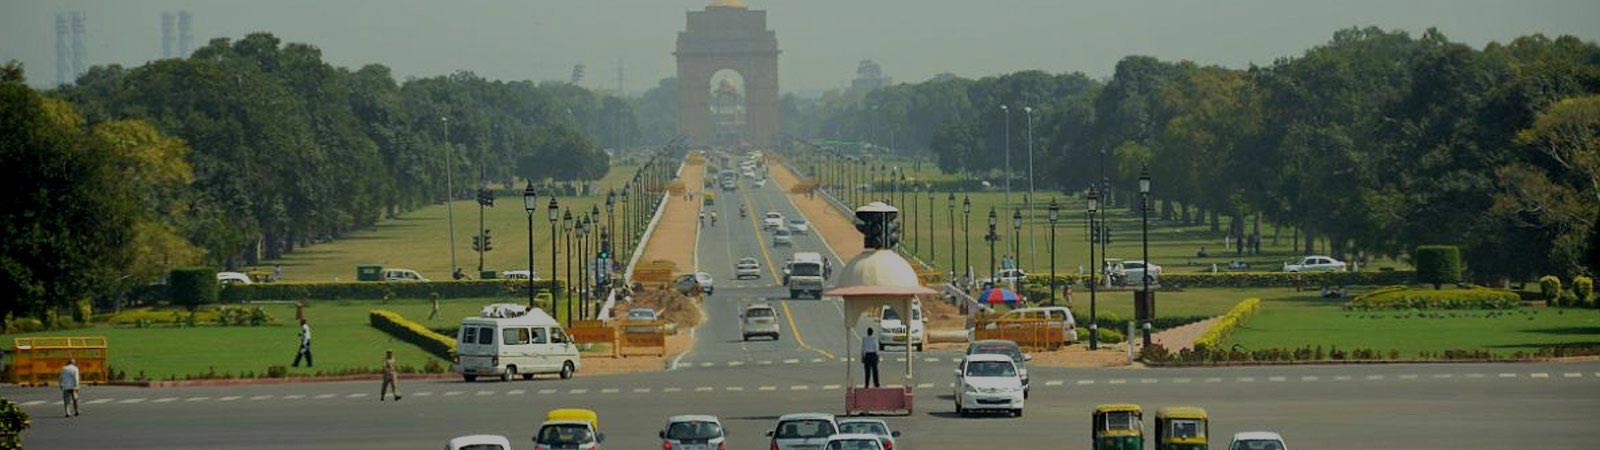 India Day Tours Delhi